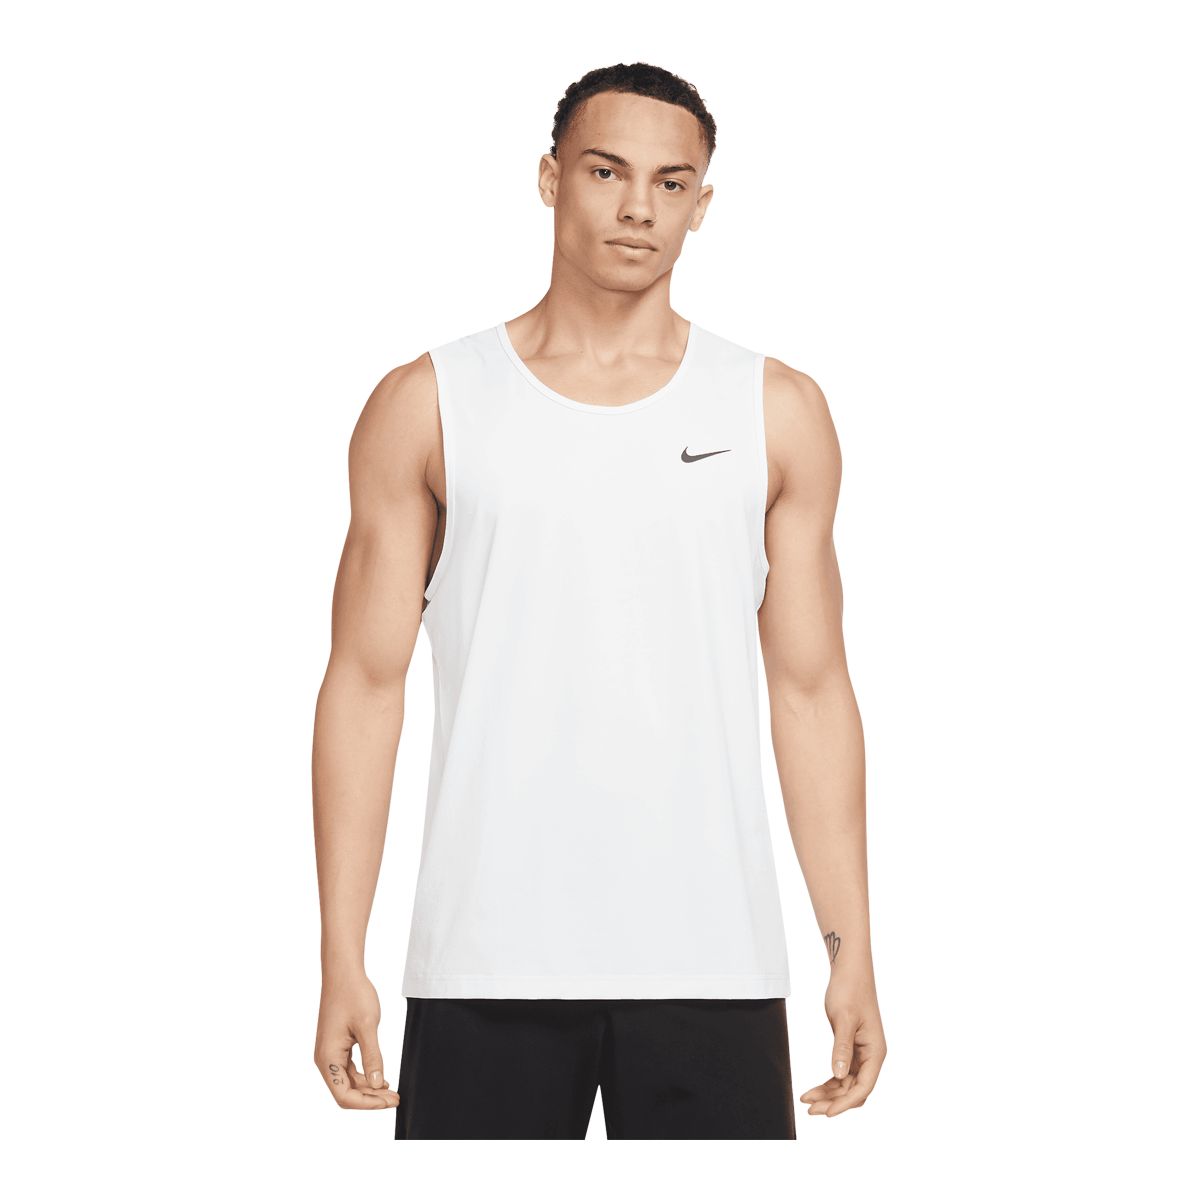 Nike Men's Rise 365 Tank Top, Breathable, Sleeveless